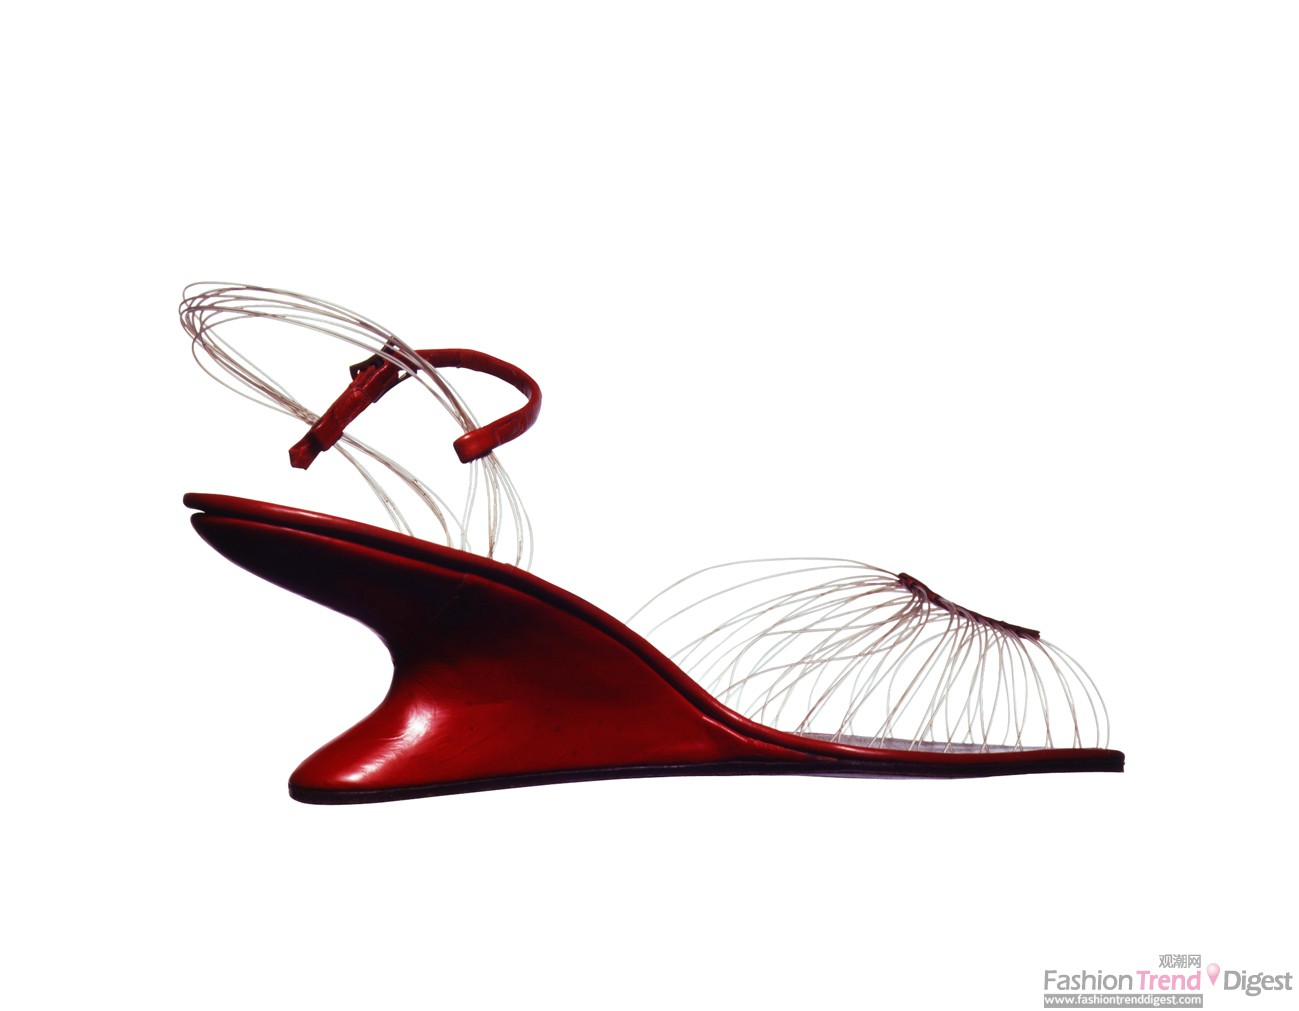 27 Salvatore Ferragamo，Invisible隐形鞋, 1947年。鞋面带有尼龙线的凉鞋，红色小牛皮包裹的木质楔形鞋跟。这一设计在1947年为Salvatore Ferragamo赢得了有“时尚界奥斯卡”之称的内曼•马库斯奖（Neiman Marcus Award）。佛罗伦萨，Salvatore Ferragamo博物馆。 